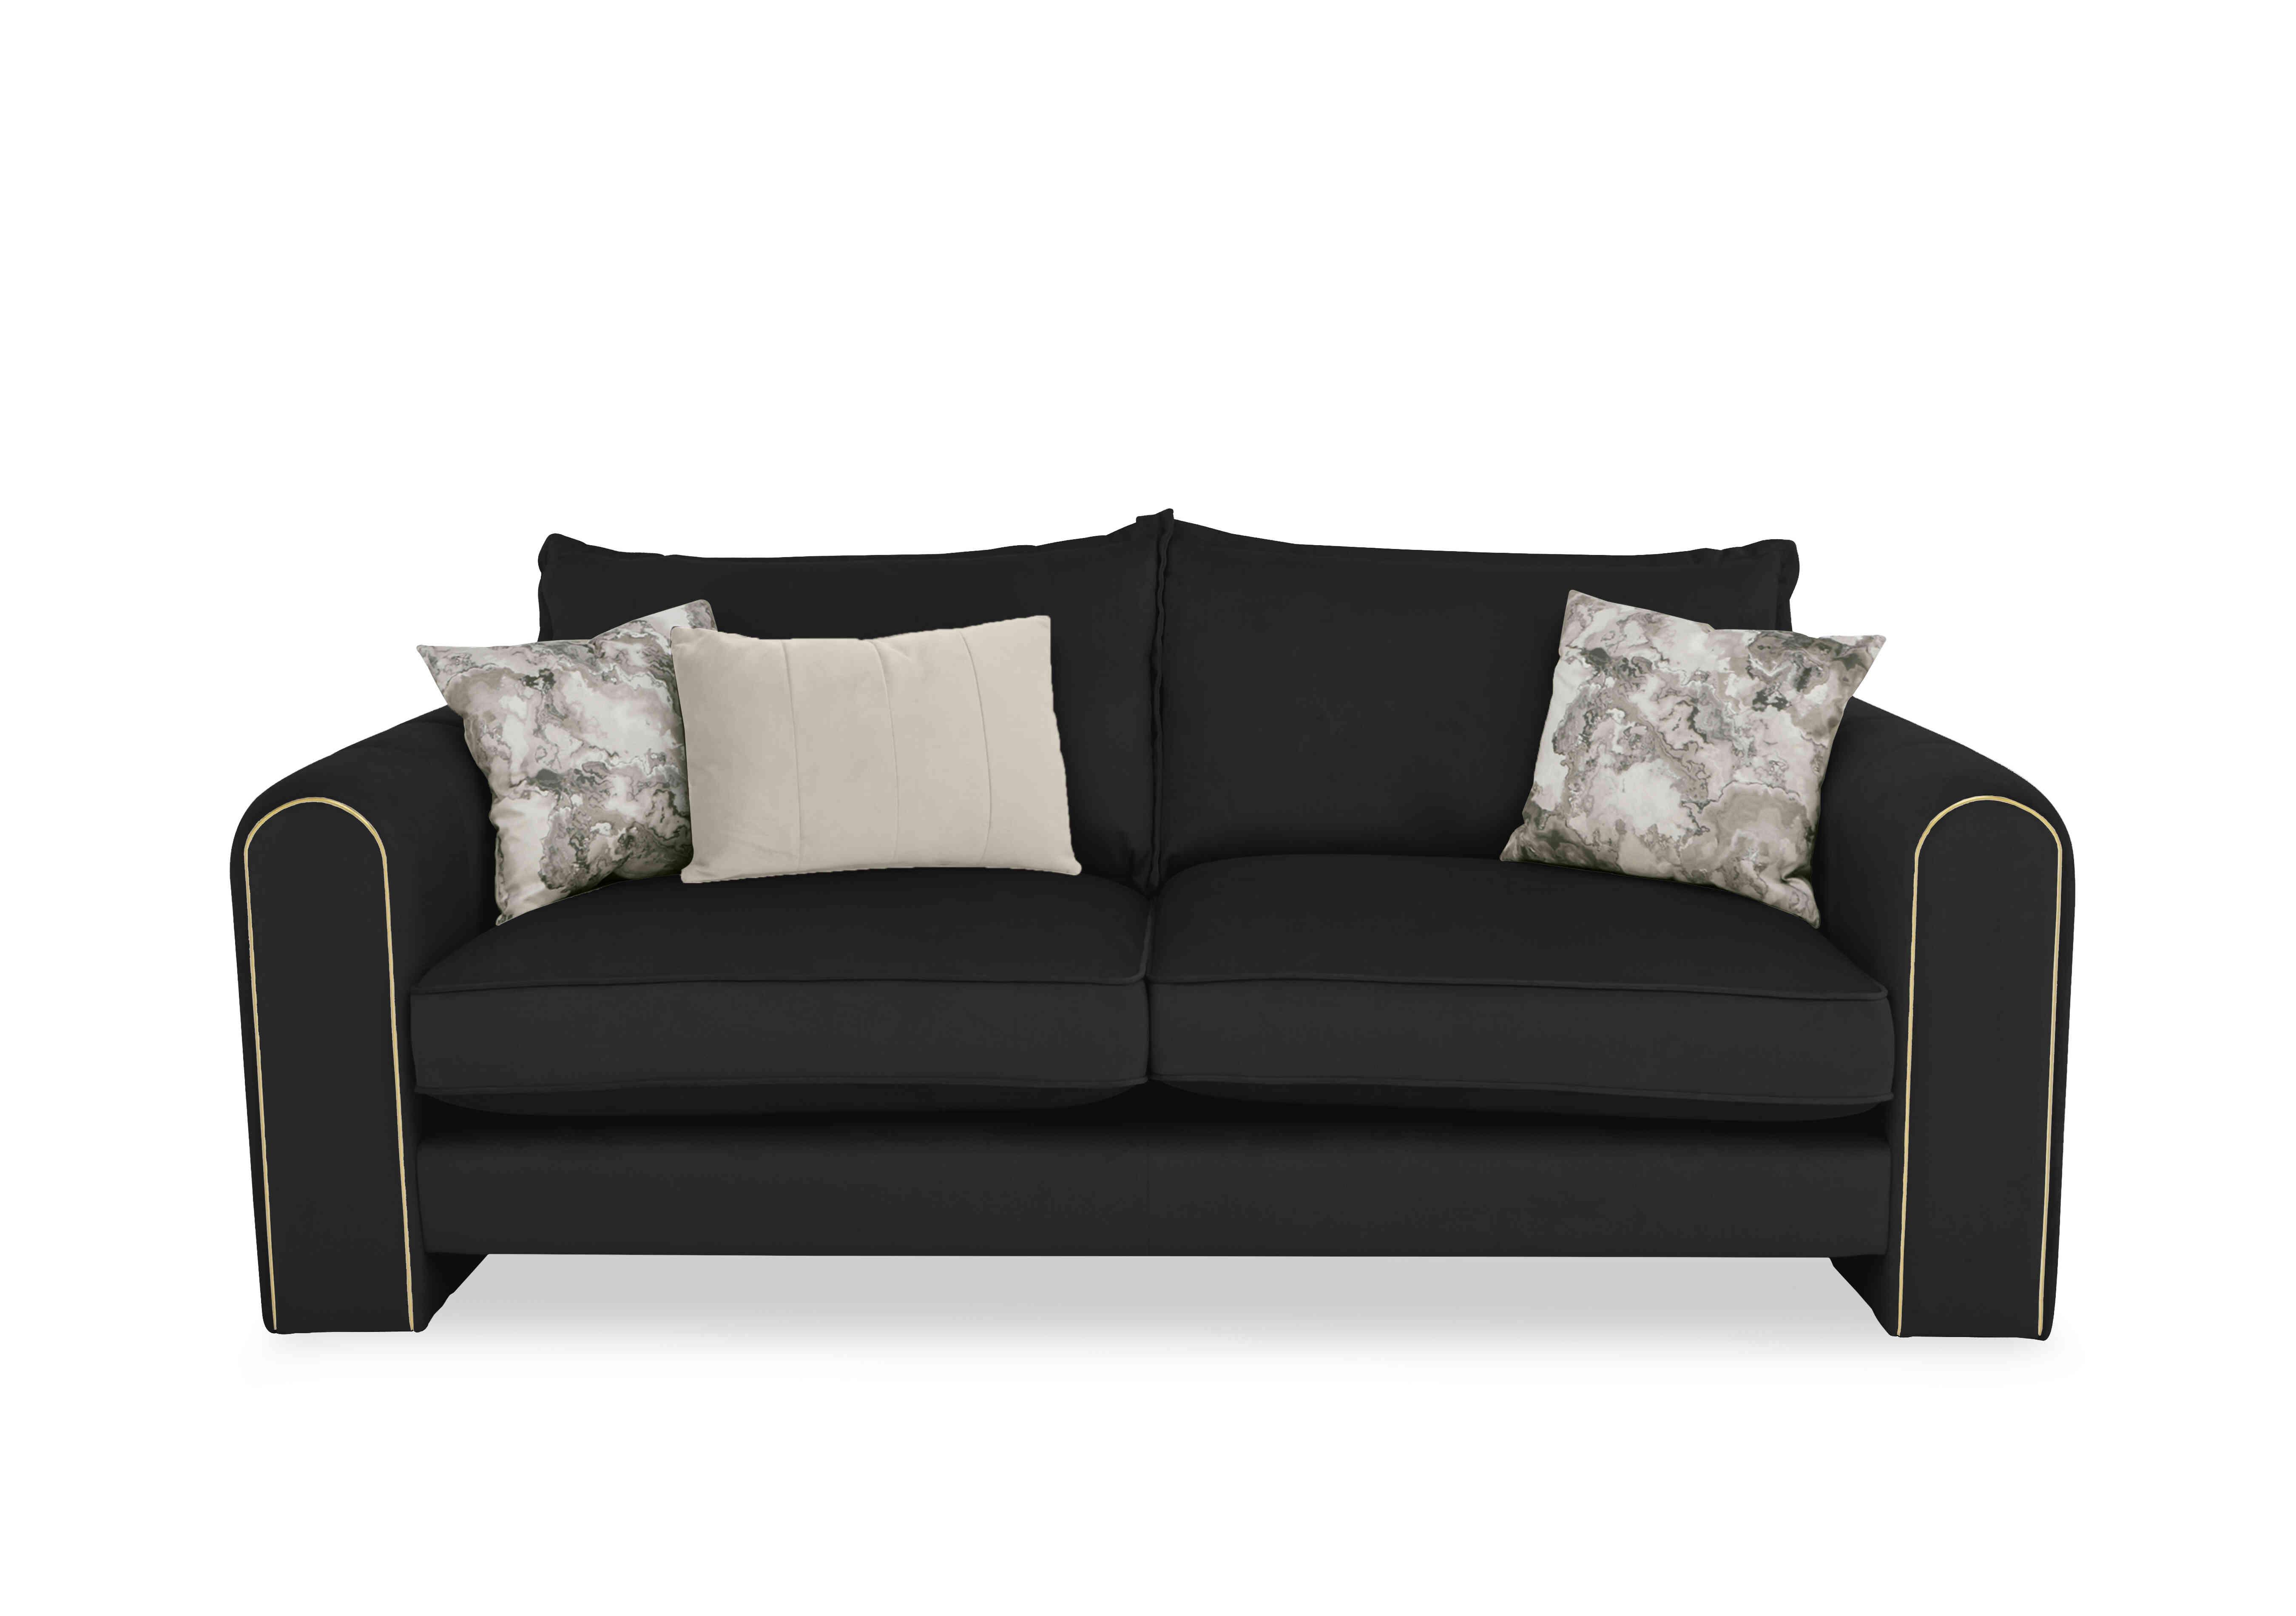 Helena 4 Seater Sofa in Pluto Ebony Gold Trim on Furniture Village